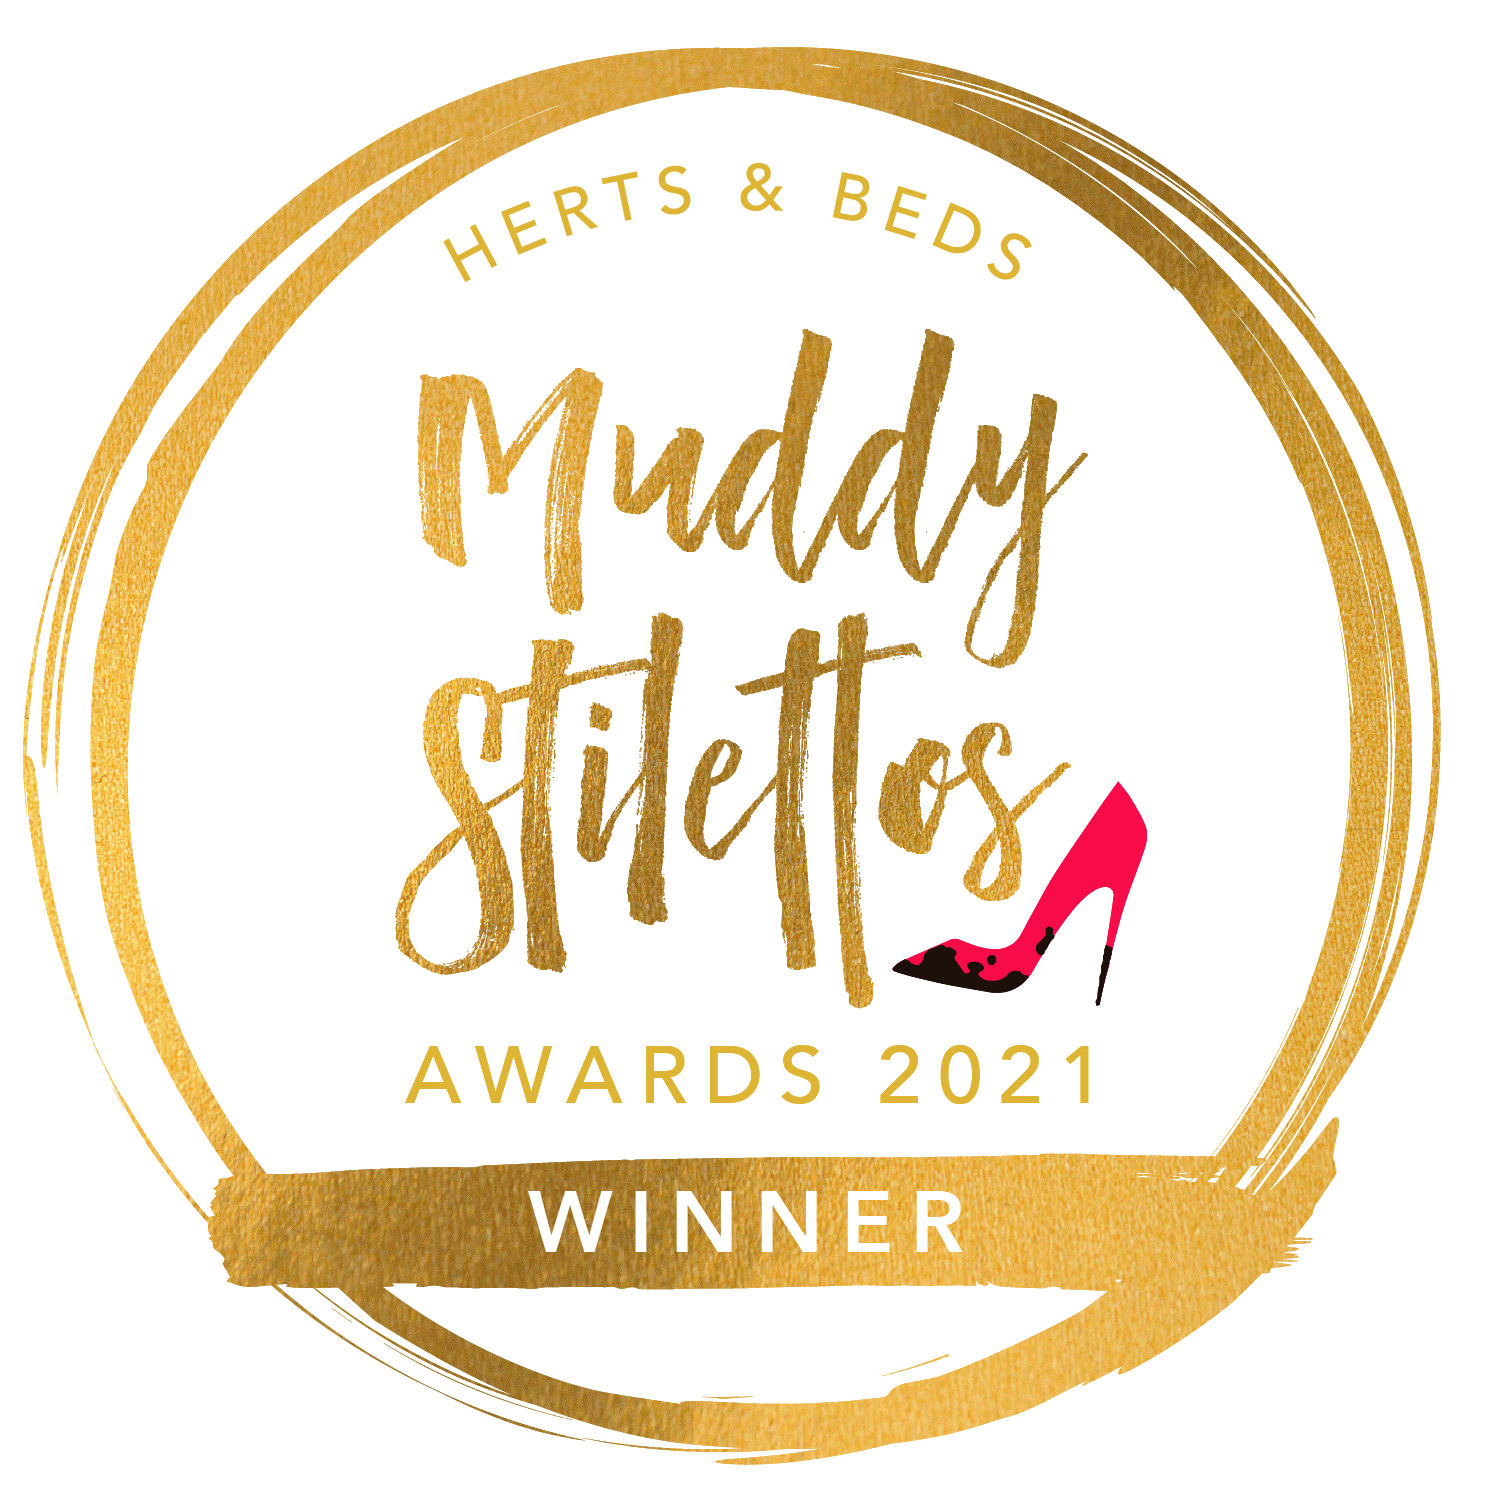 Muddy_Awards_Med_Res_Herts_21.png